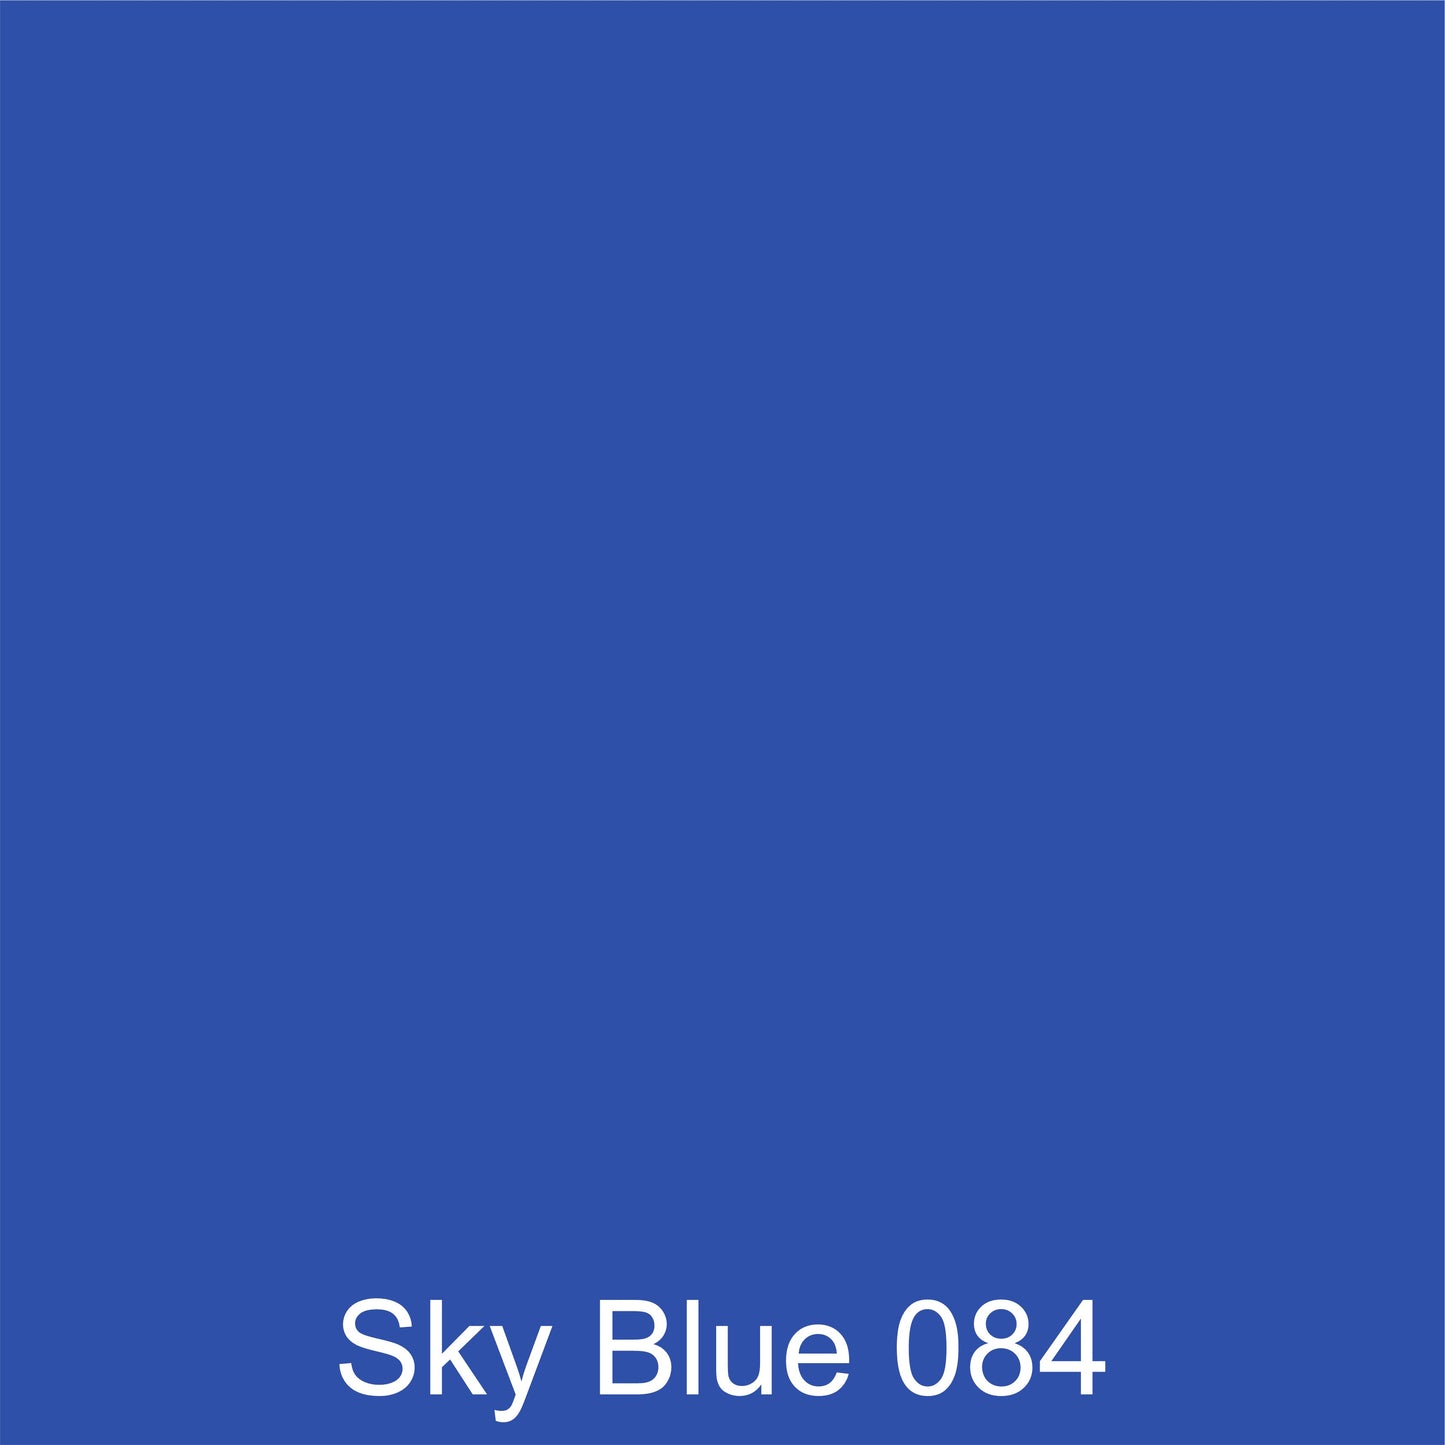 Oracal 651 Gloss :- Sky Blue - 084 - 300mm x 10 Metres